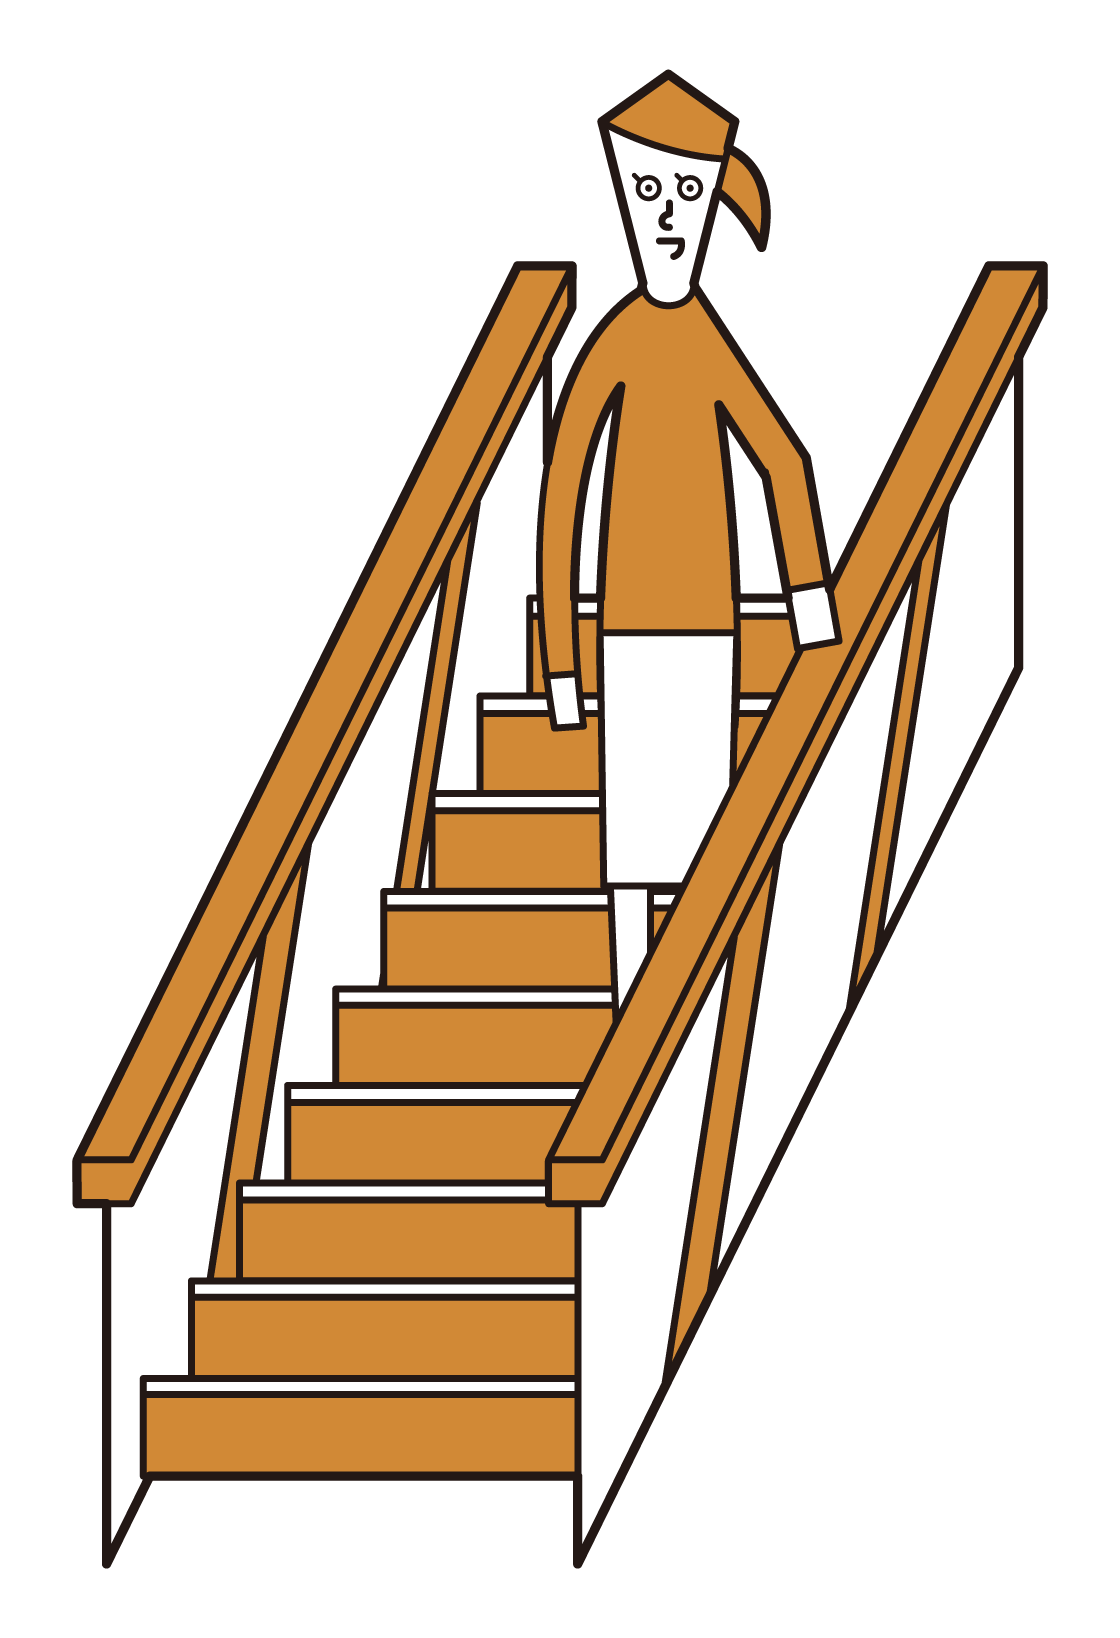 Illustration of a woman riding an escalator